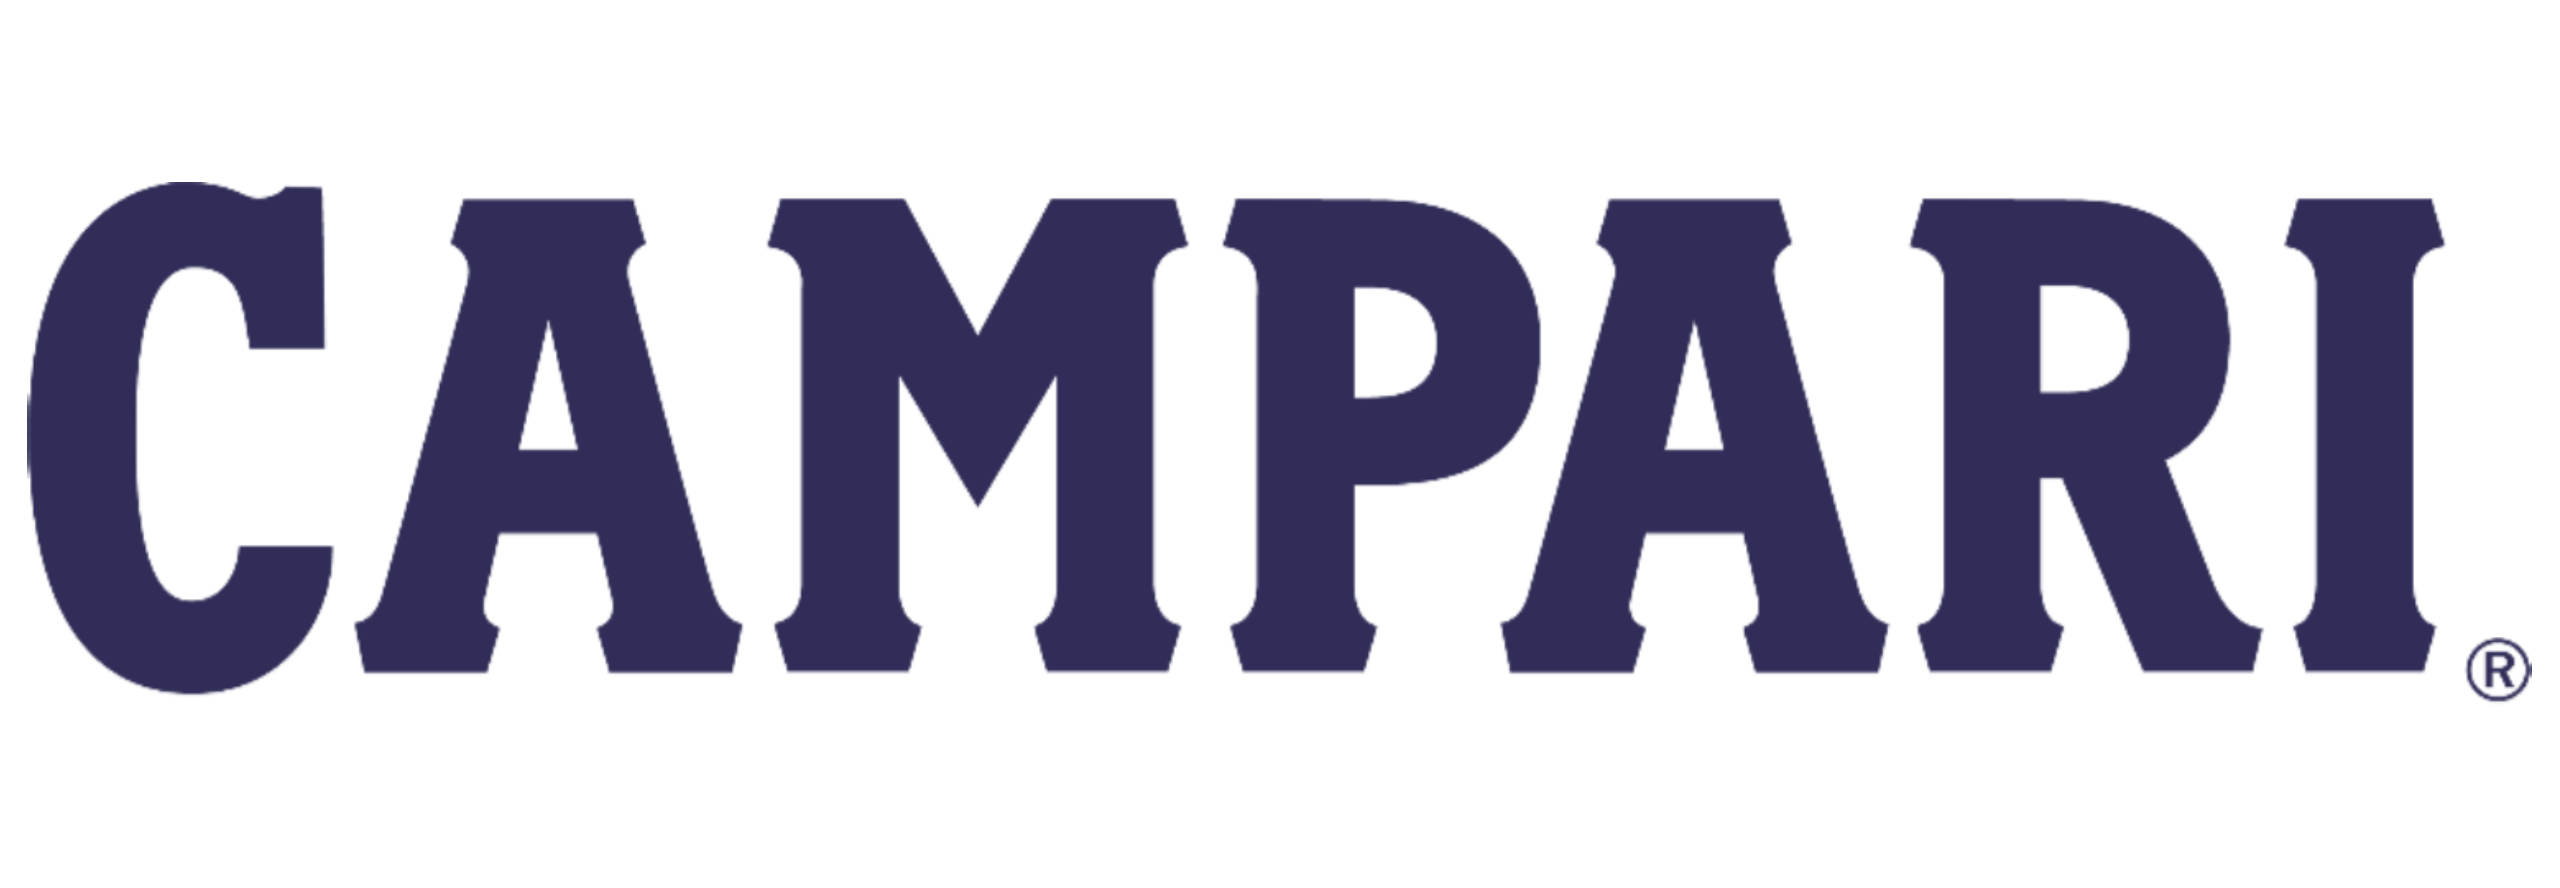 Campari logo - Tryane Analytics for internal communications